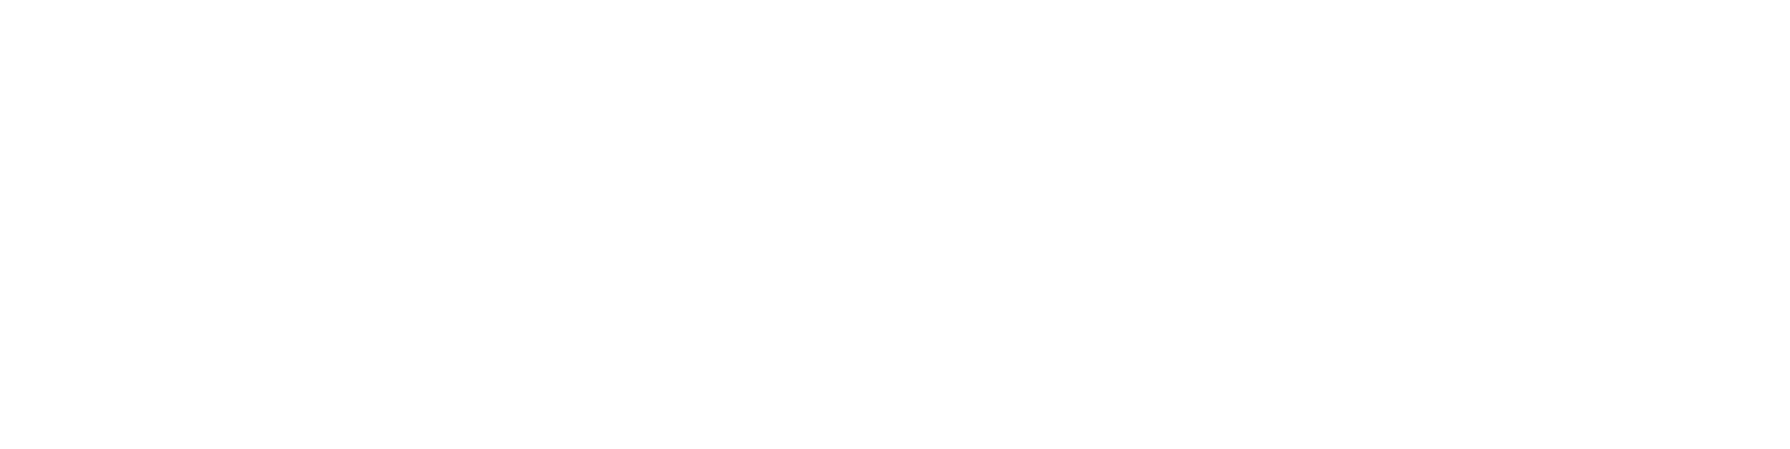 Dreamlifter Paramotors PPG